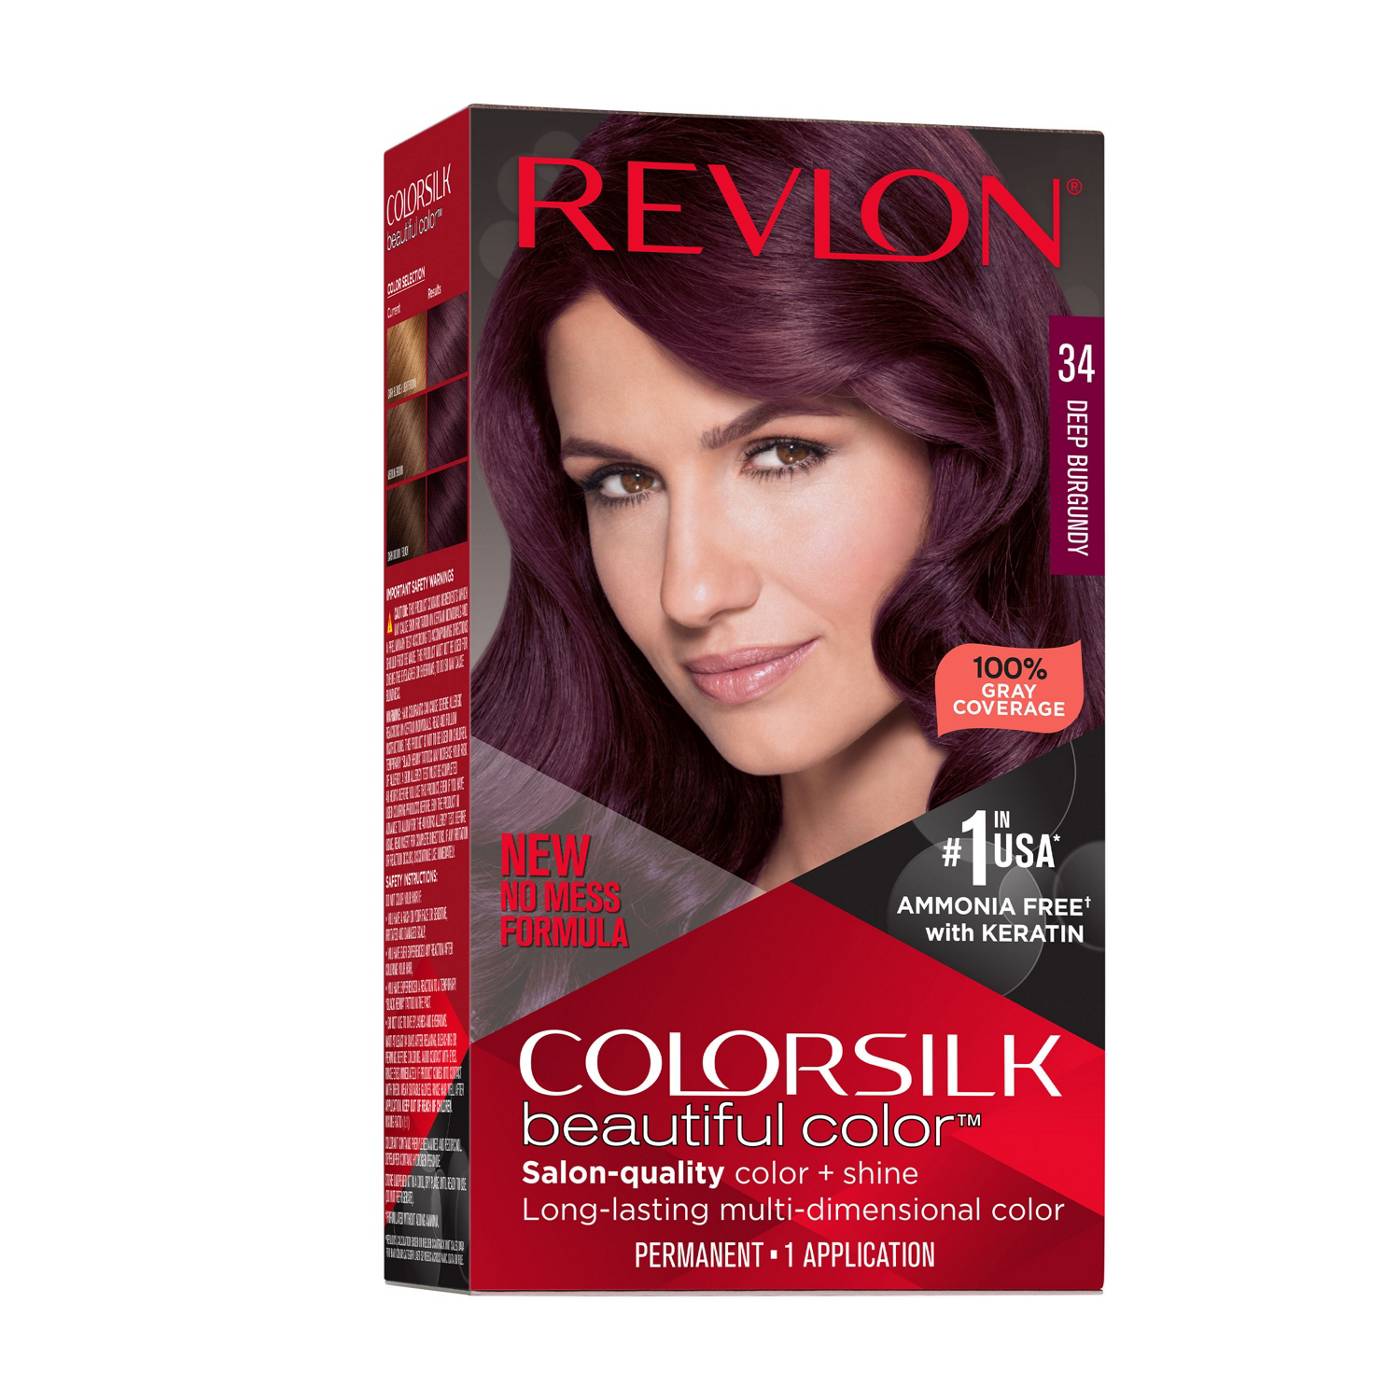 Revlon ColorSilk Hair Color - 34 Deep Burgundy; image 1 of 7